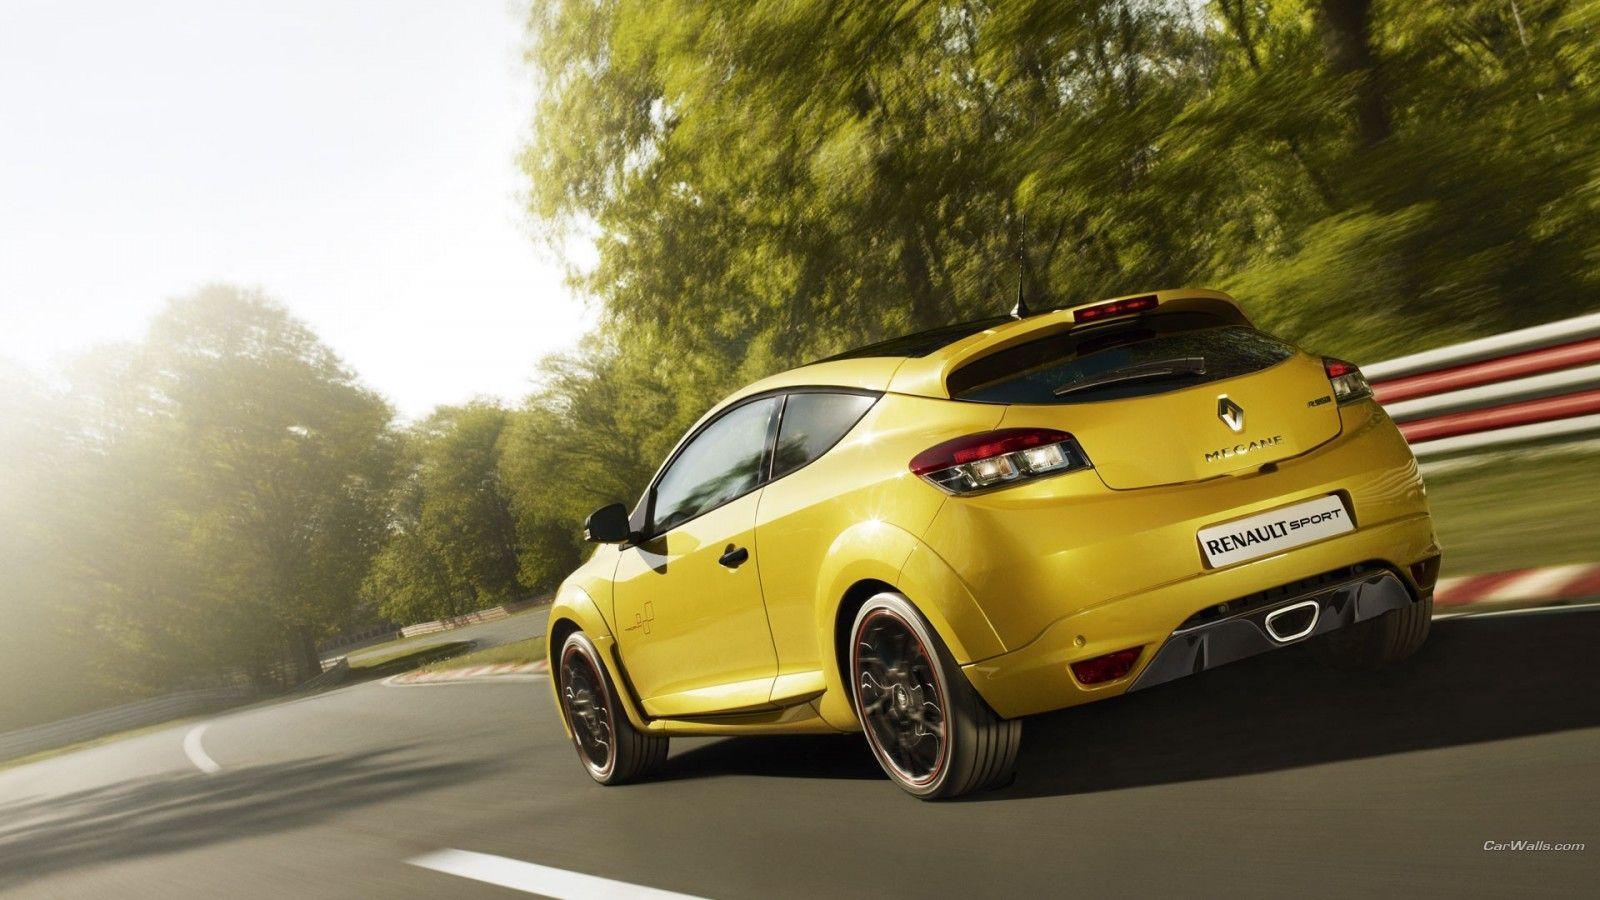 Wallpaper, yellow cars, Renault Megane RS, land vehicle, automotive